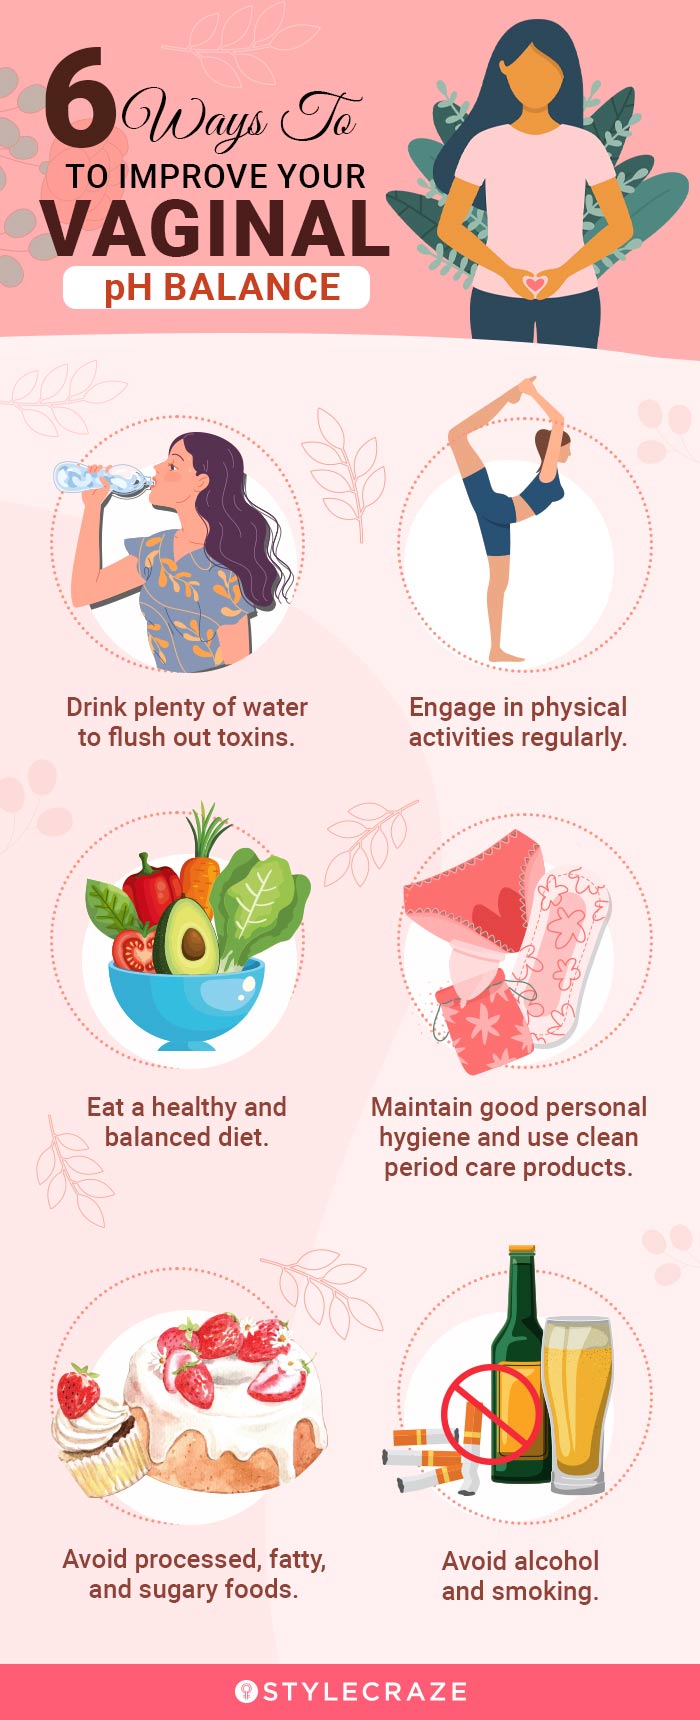 6 ways to improve your vaginal pH balance [infographic]